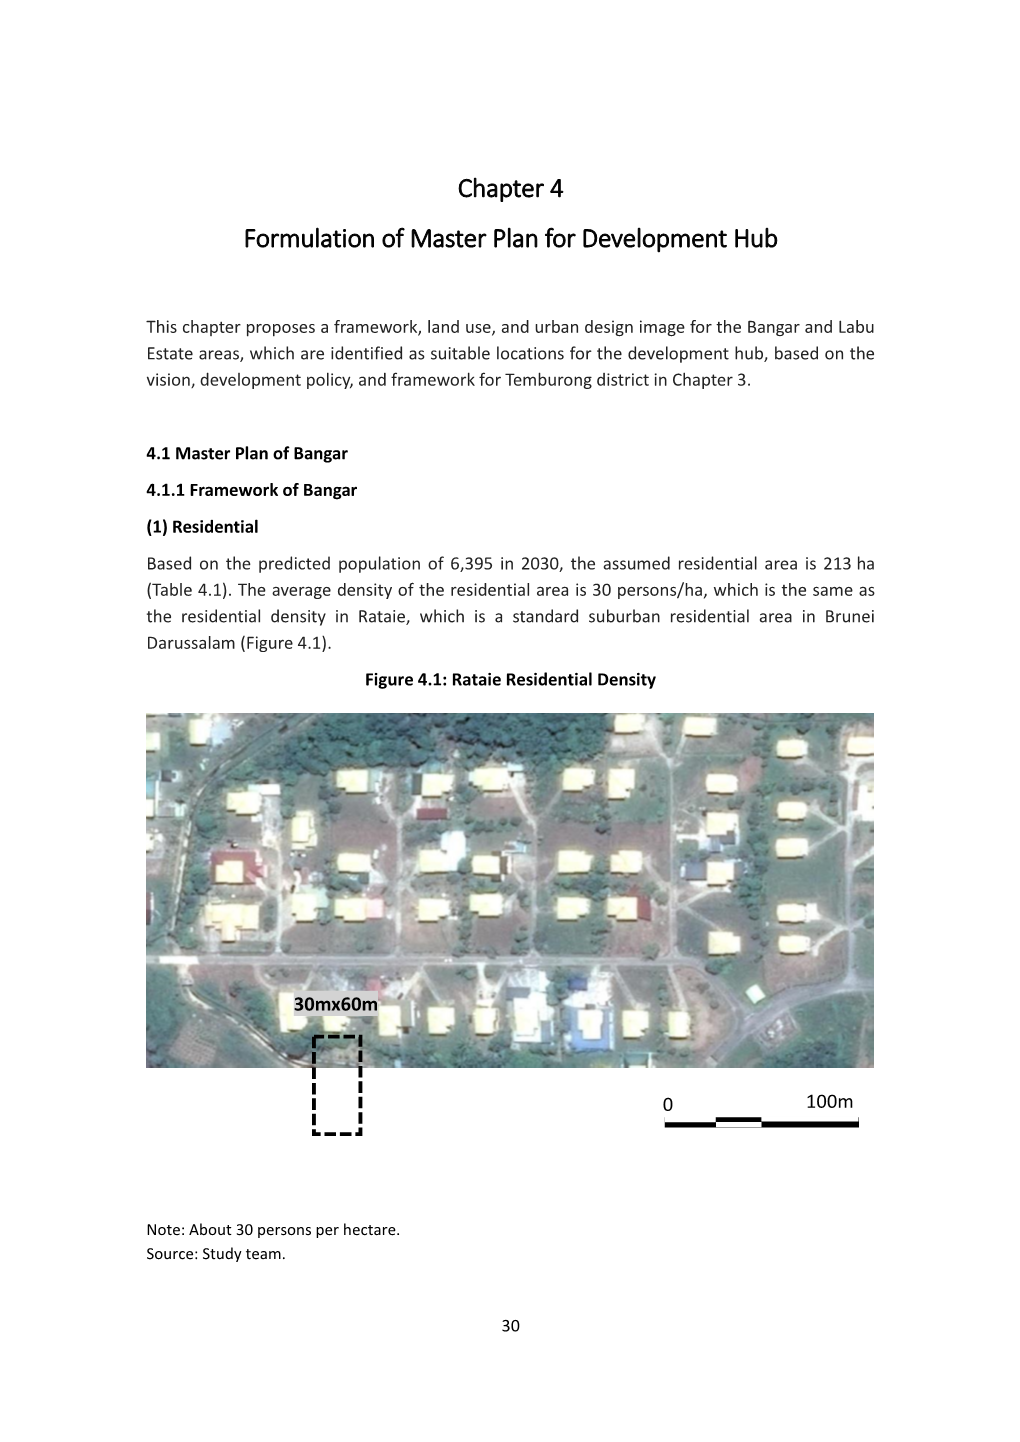 Chapter 4. Formulation of Master Plan for Development